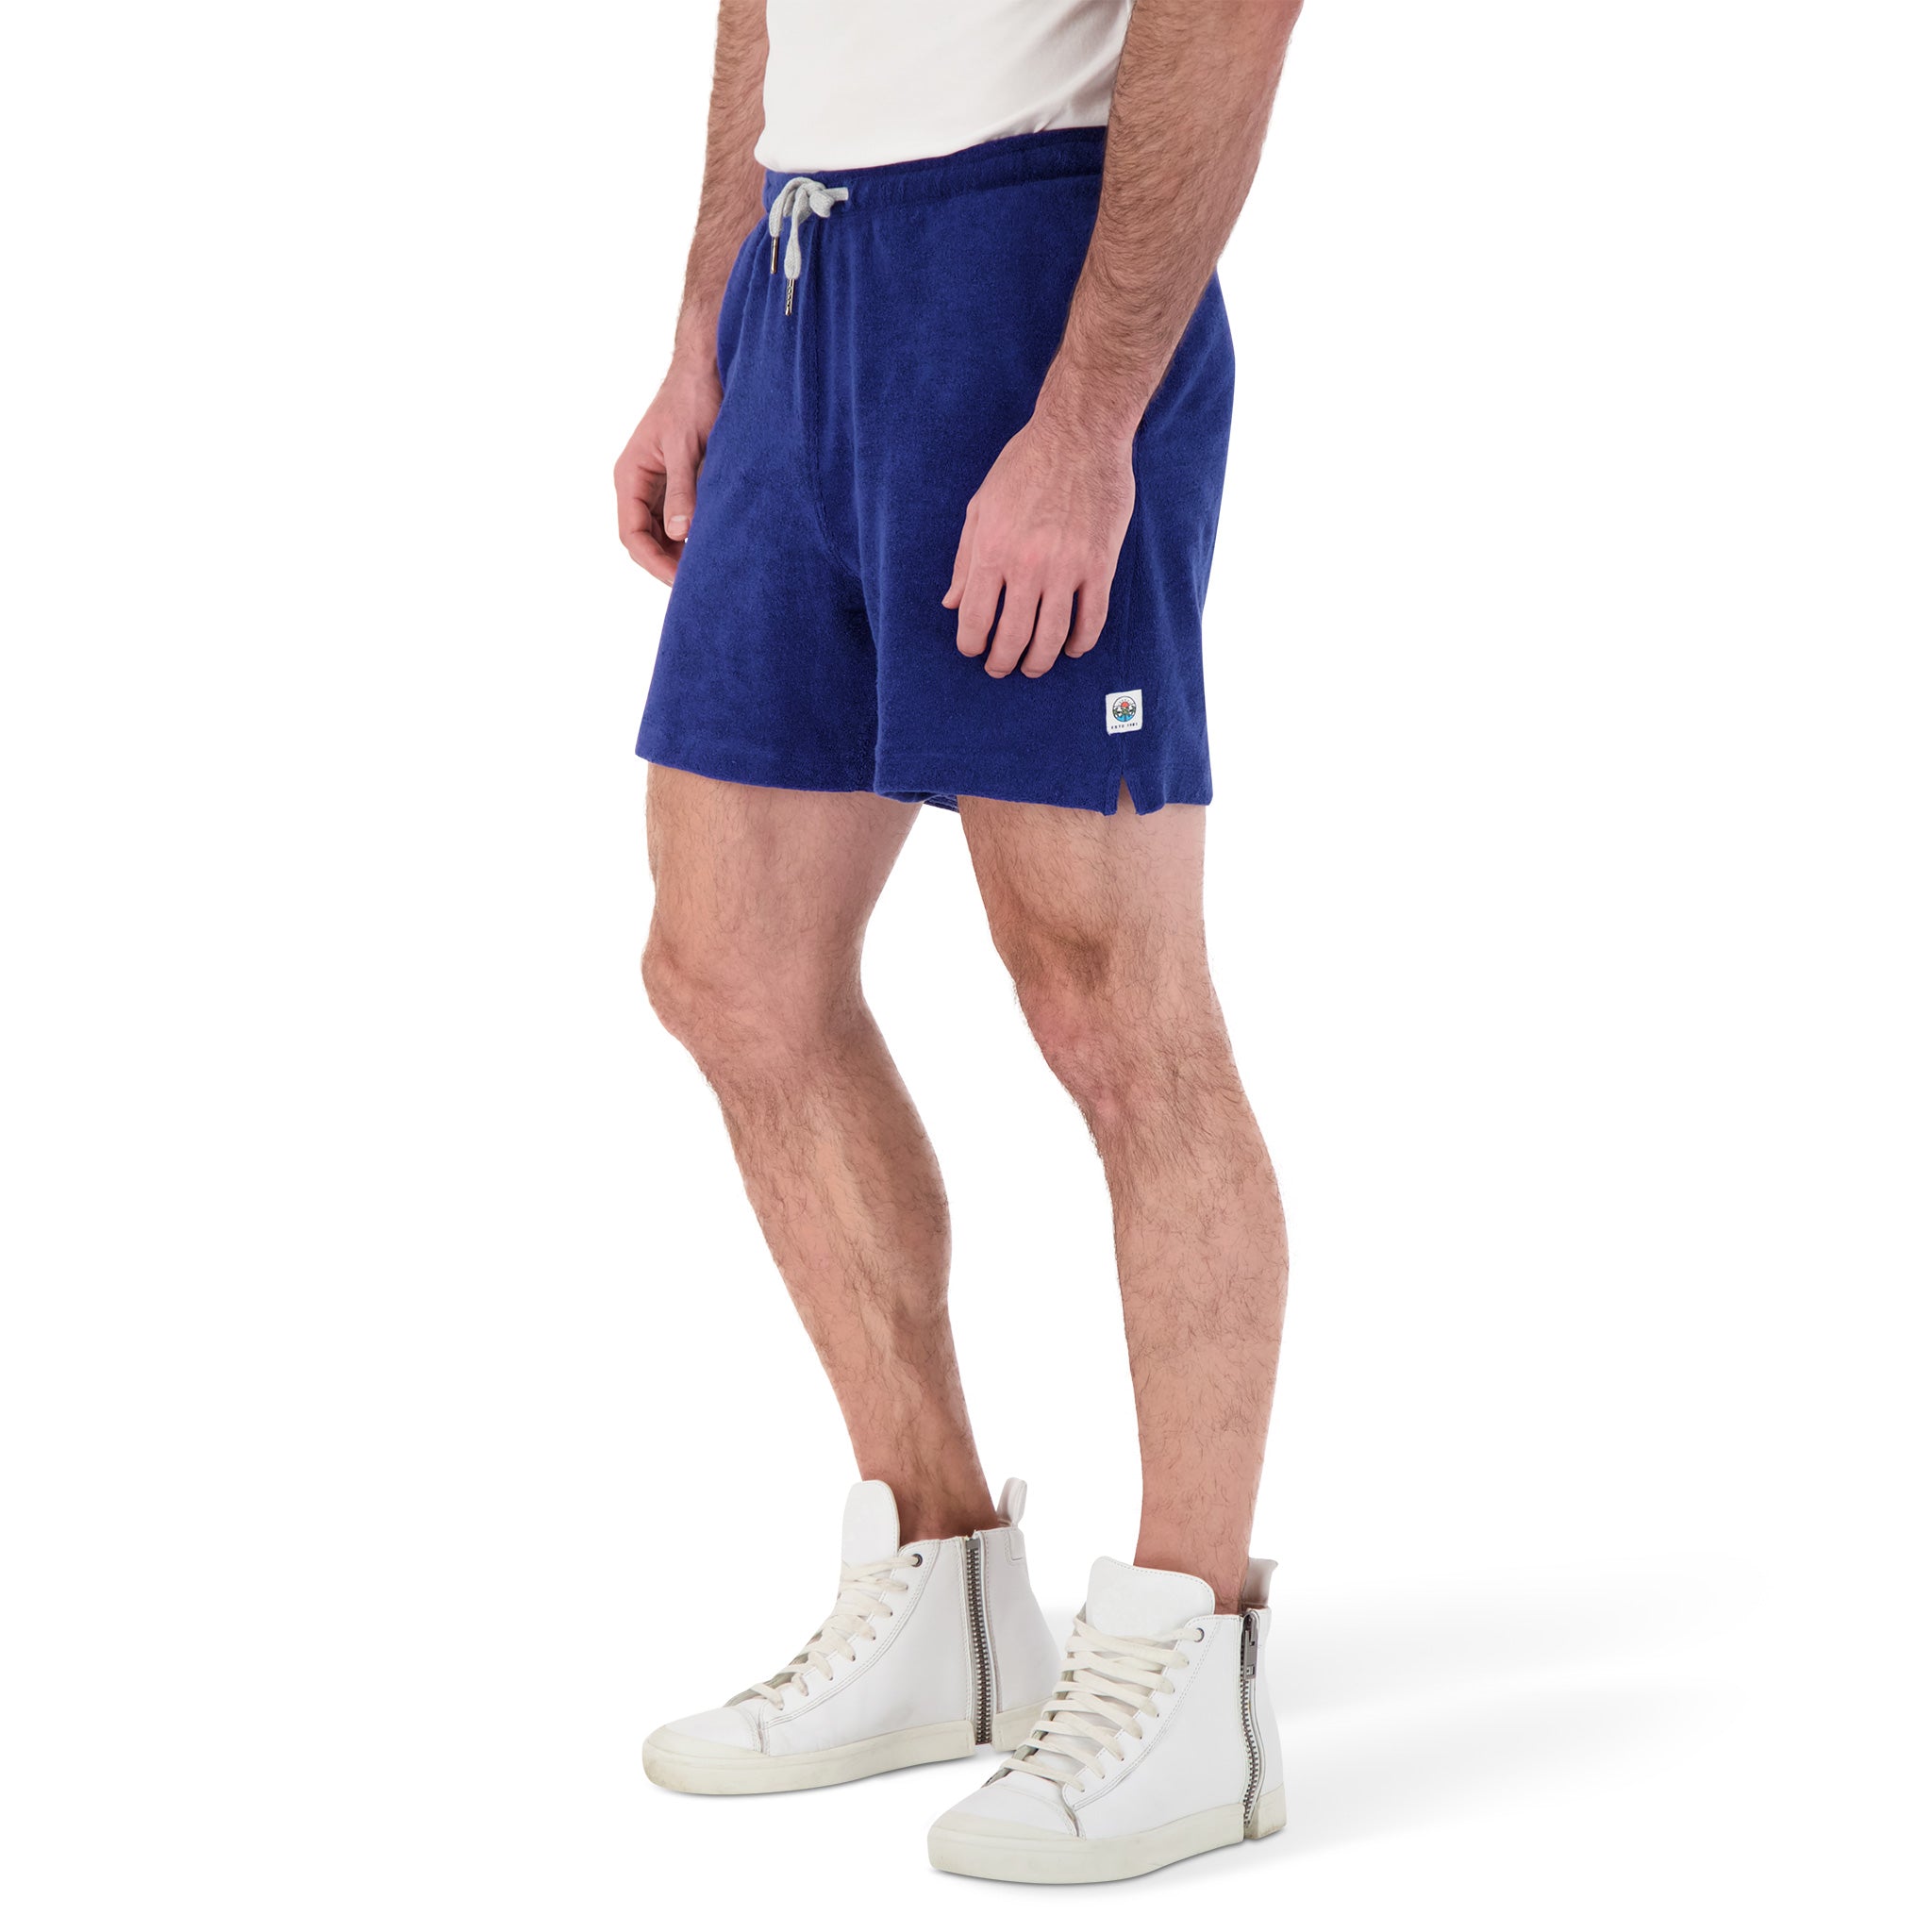 Terry Cloth Knit Shorts in Indigo Blue